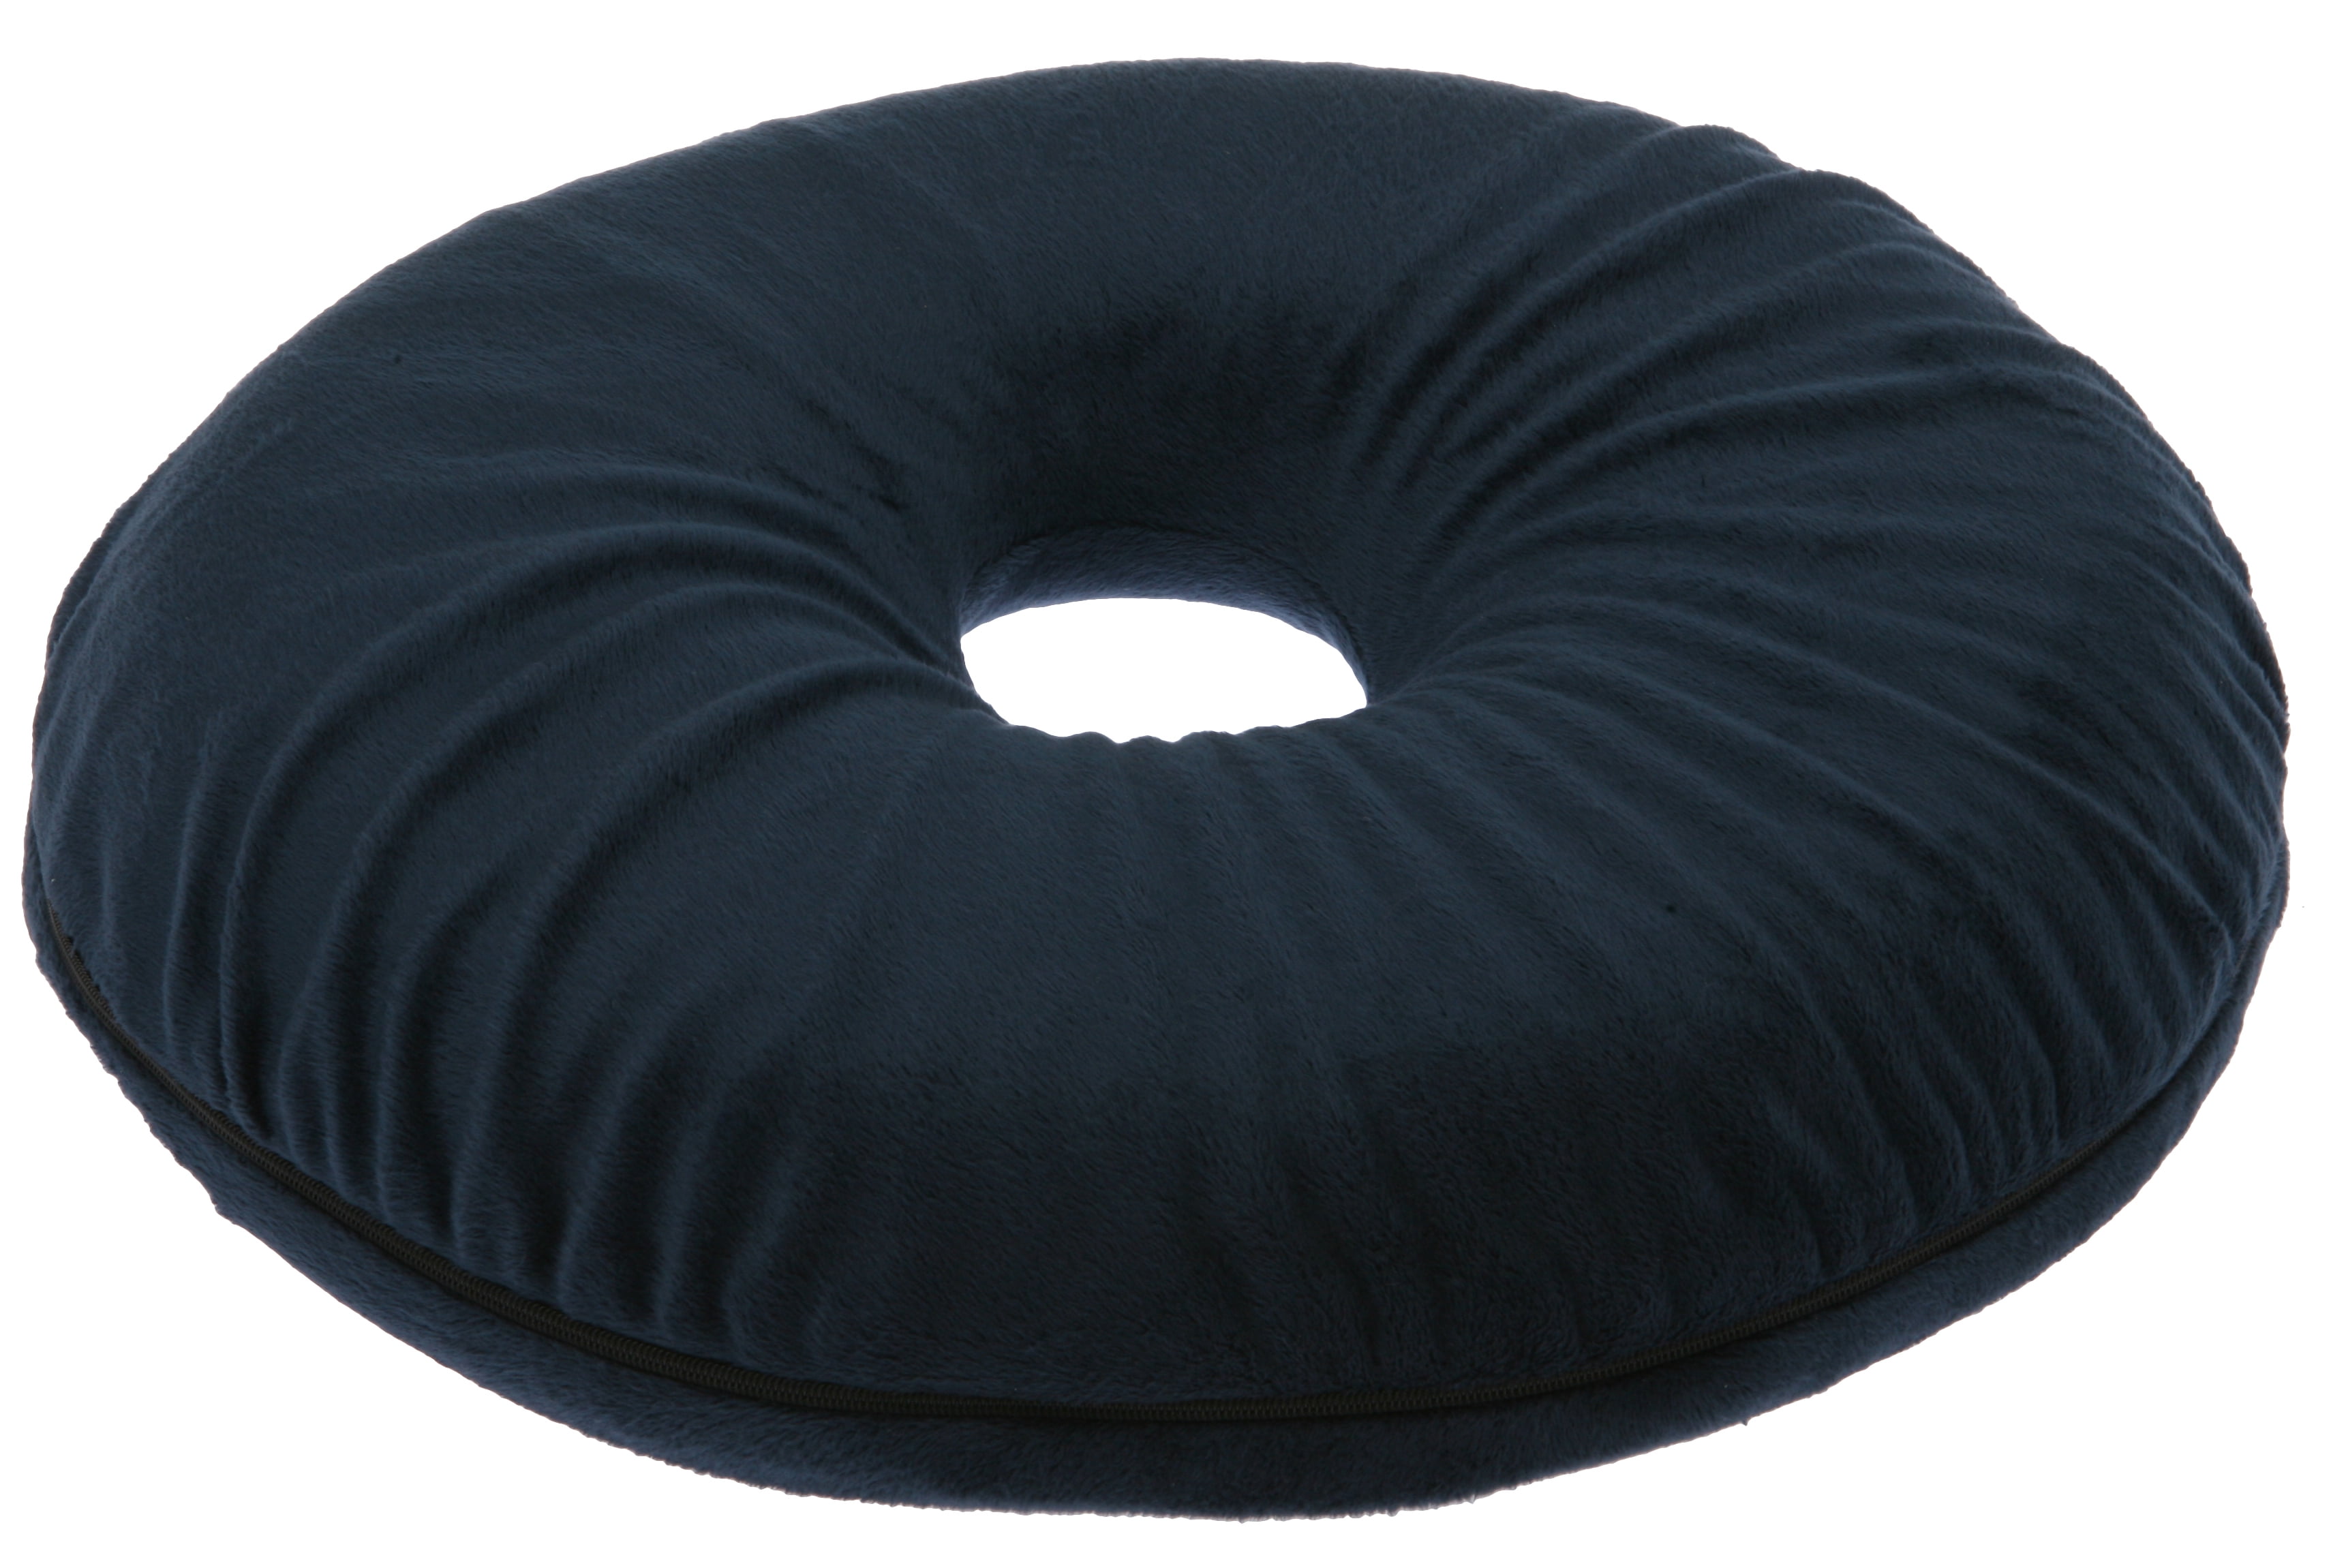 Medic Therapeutics Memory Foam Orthopedic Round Donut Cushion